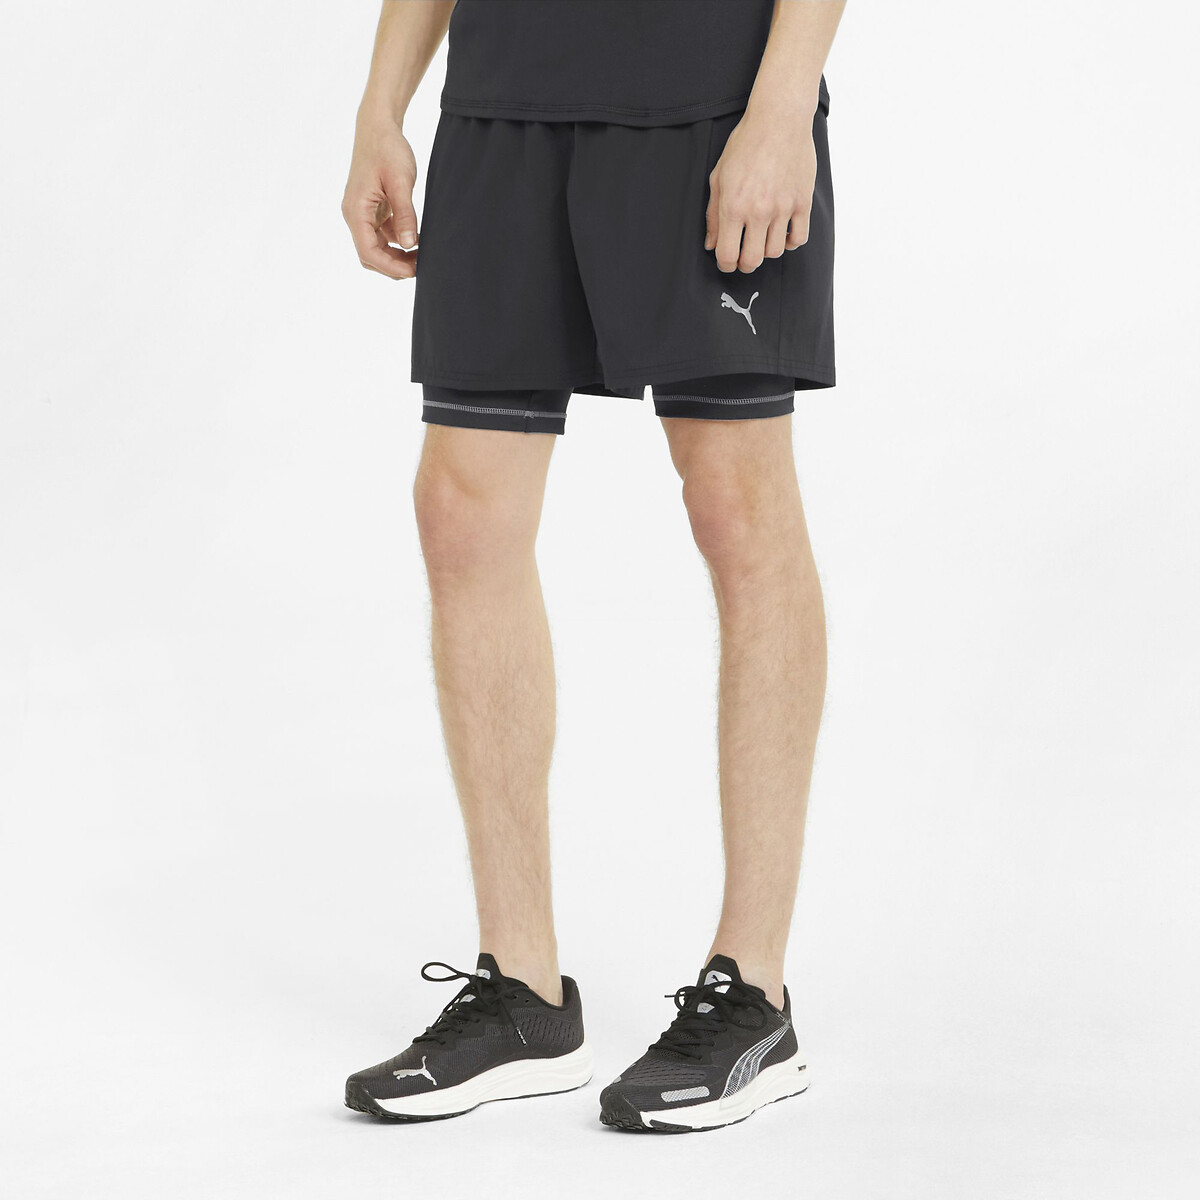 2-in-1 running shorts, black, Puma | La Redoute